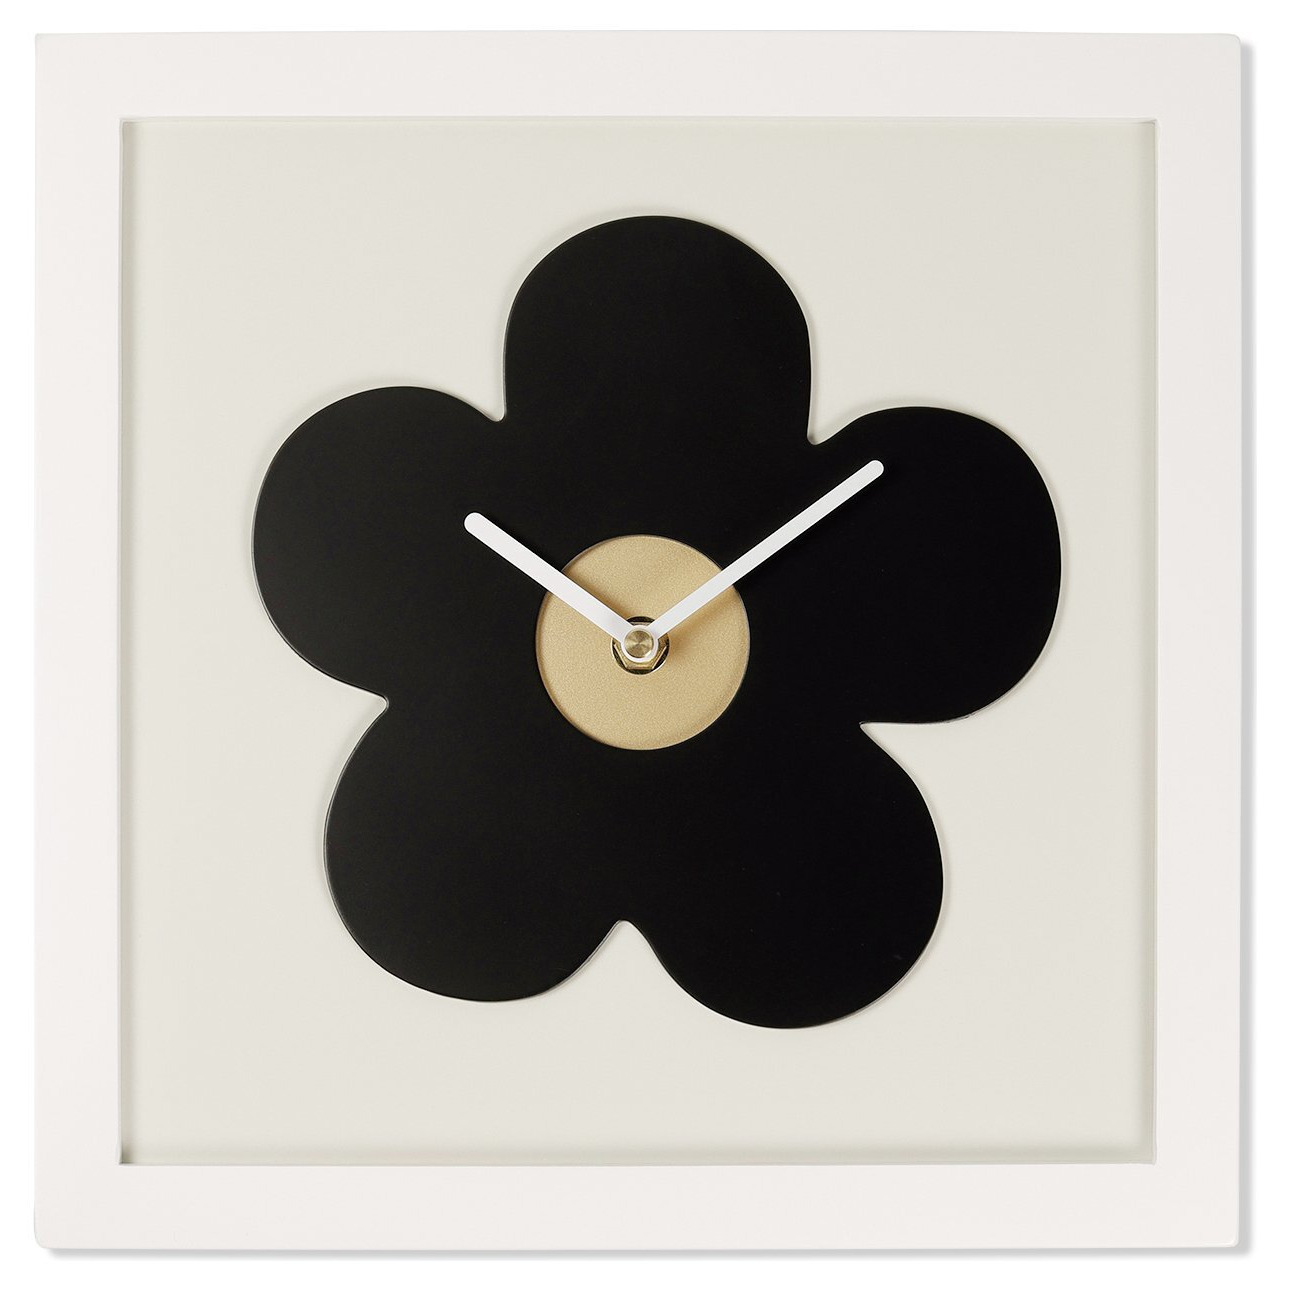 Spirit Flower Shaped Wall Clock - Black - image 1